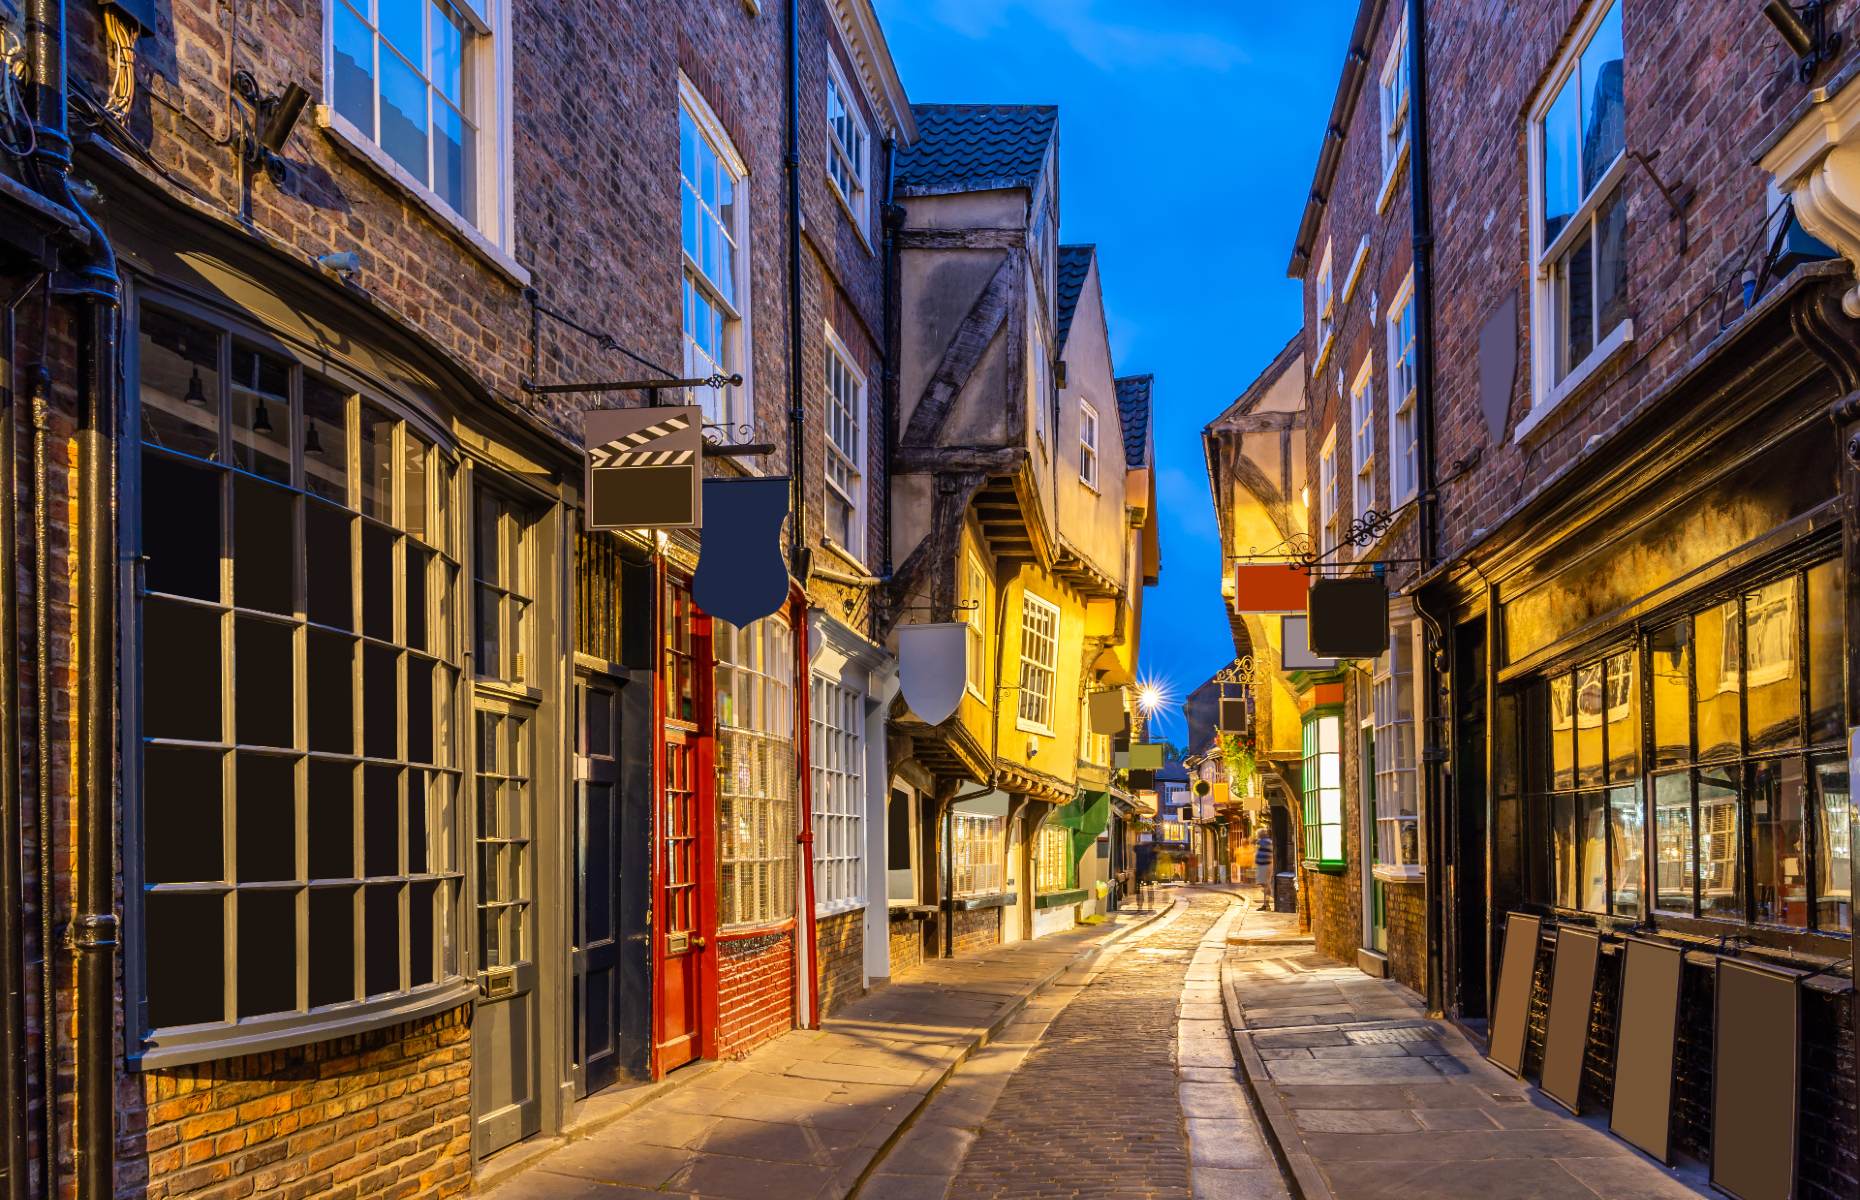 The Shambles, York (Image: vichie81/Shutterstock)